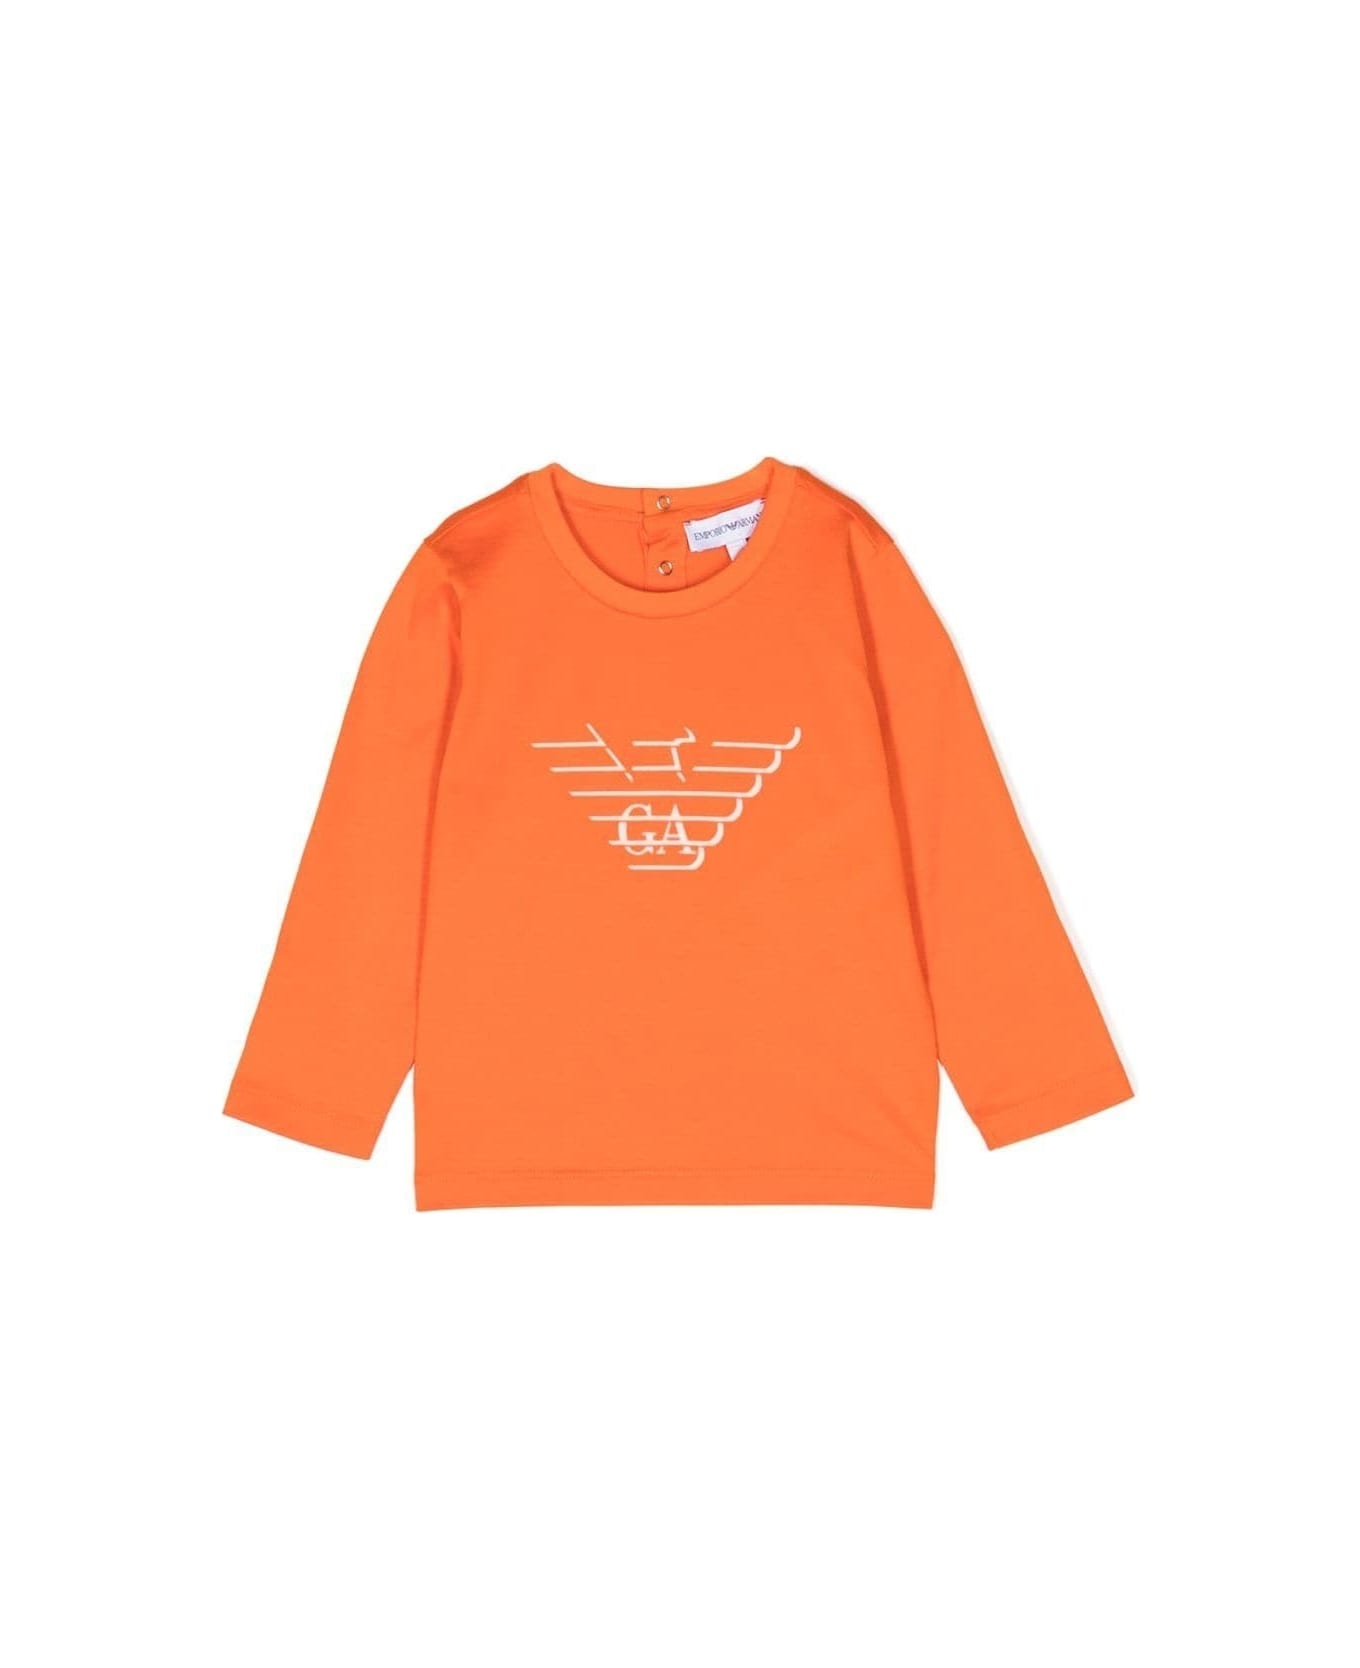 Emporio Armani Printed T-shirt - Orange